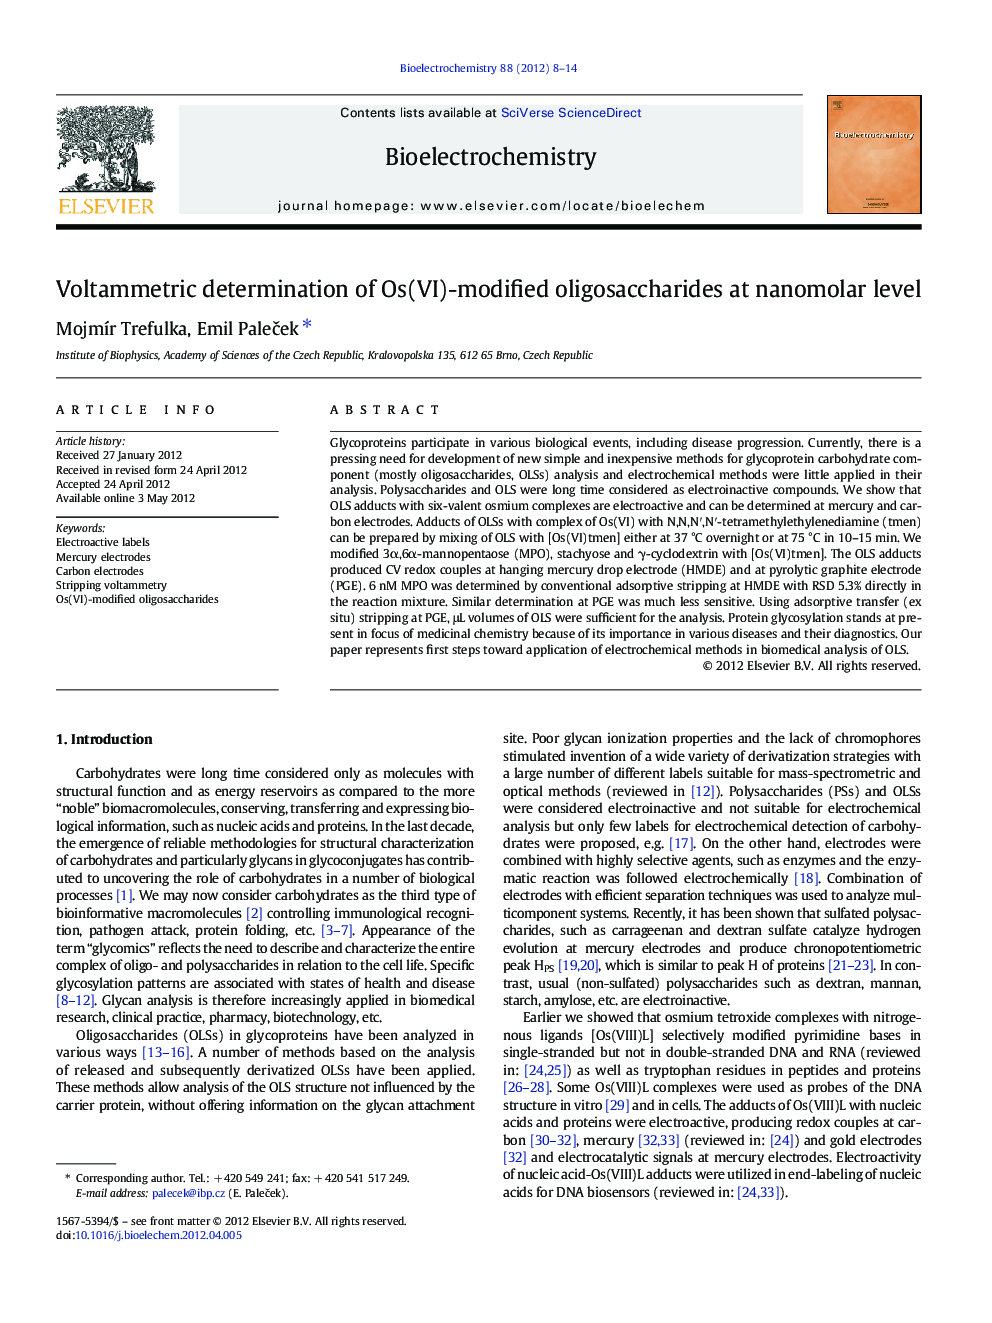 Voltammetric determination of Os(VI)-modified oligosaccharides at nanomolar level